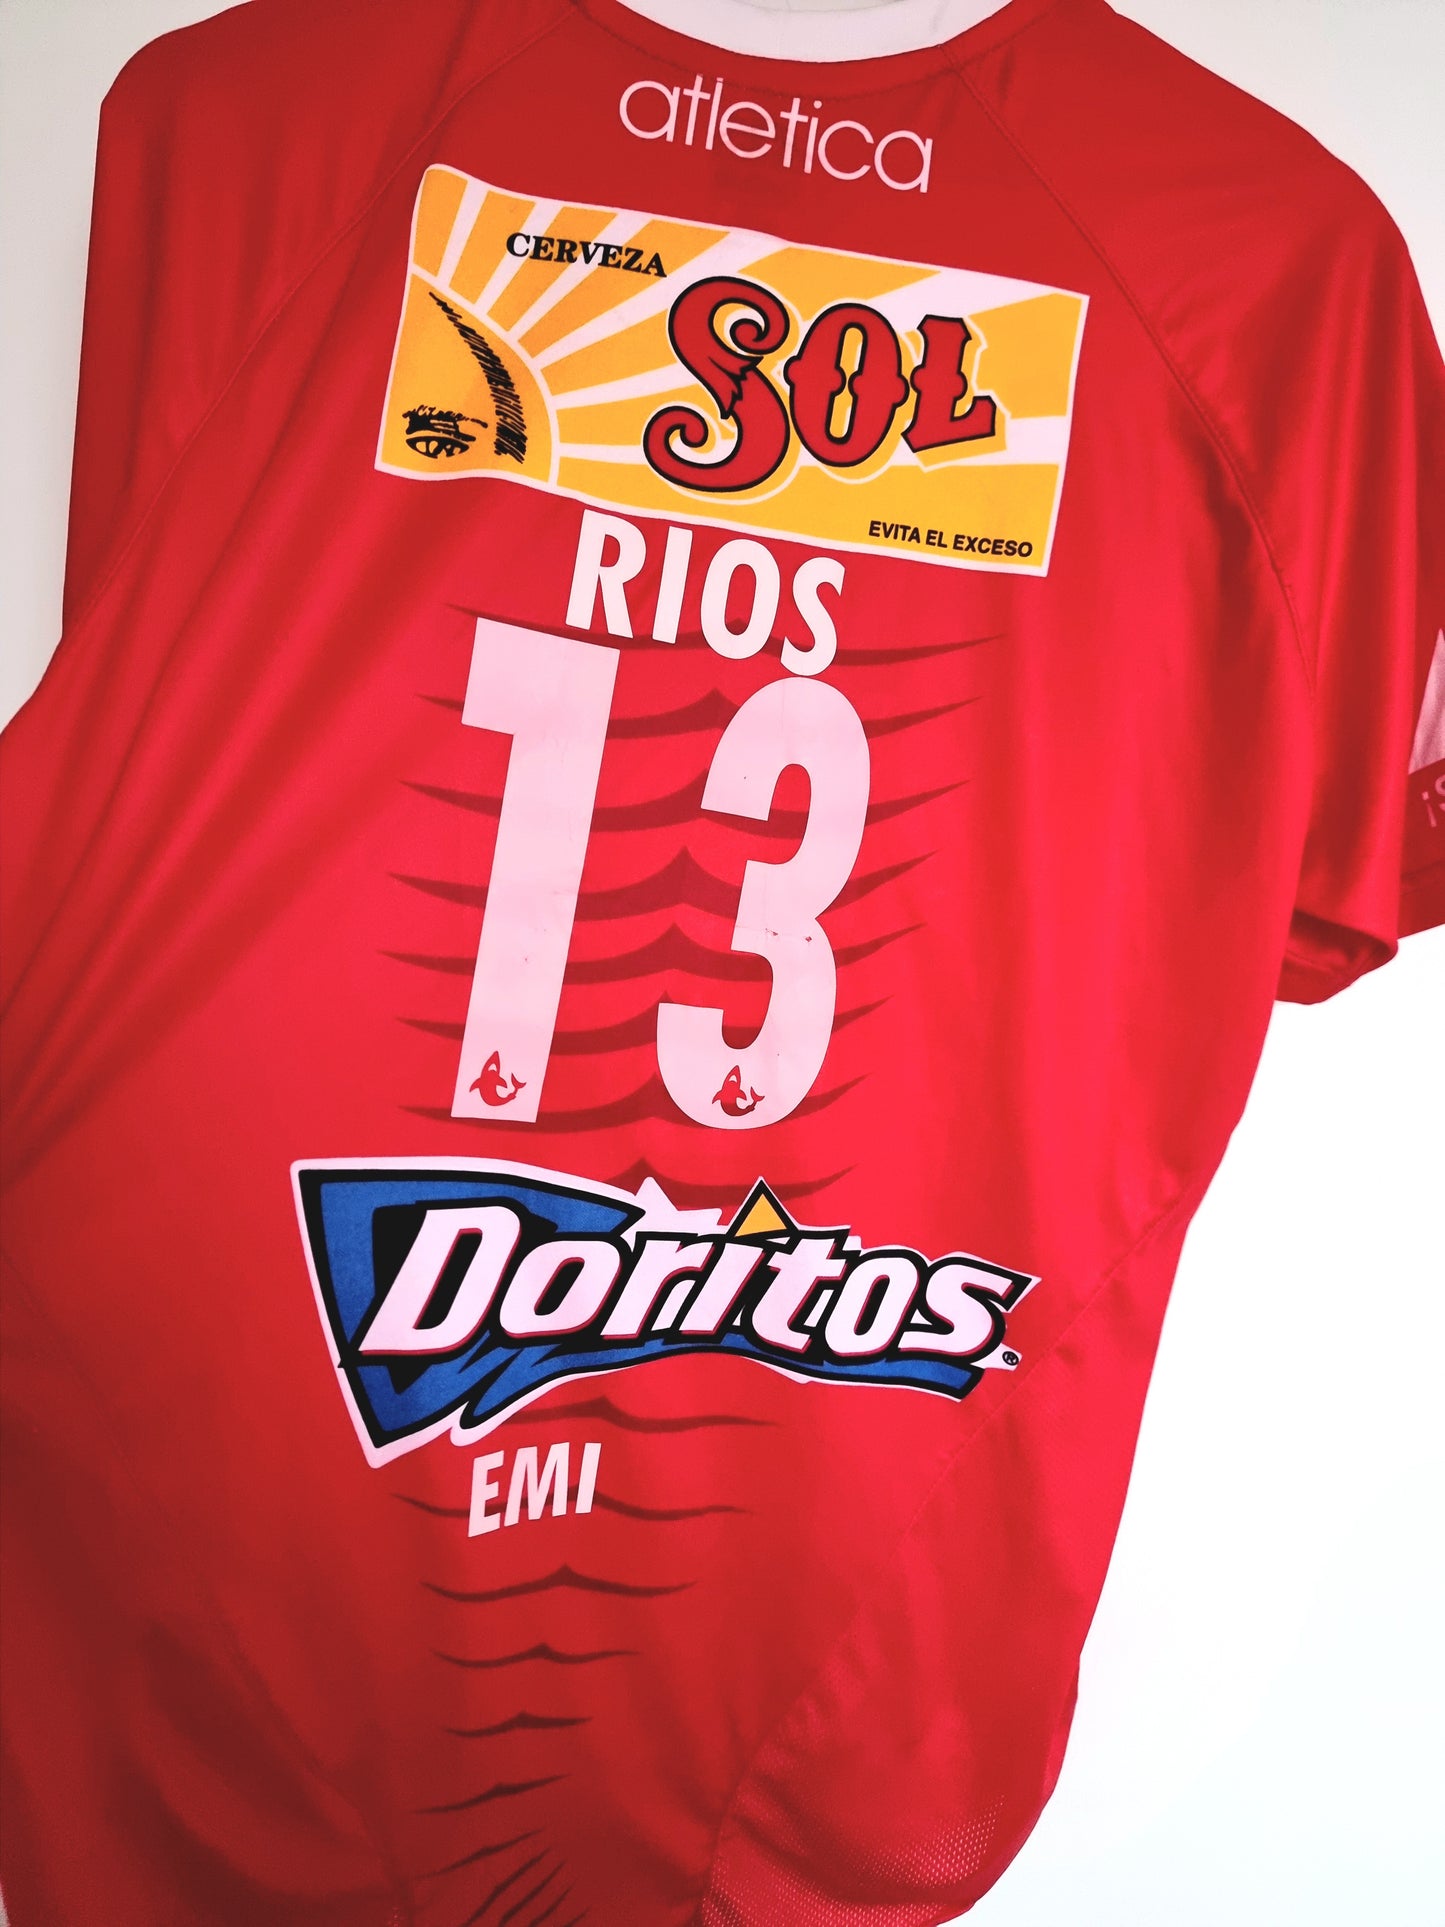 Atletica Tiburones Rojos Veracruz 07/08 'Rios 13' Home Shirt Medium